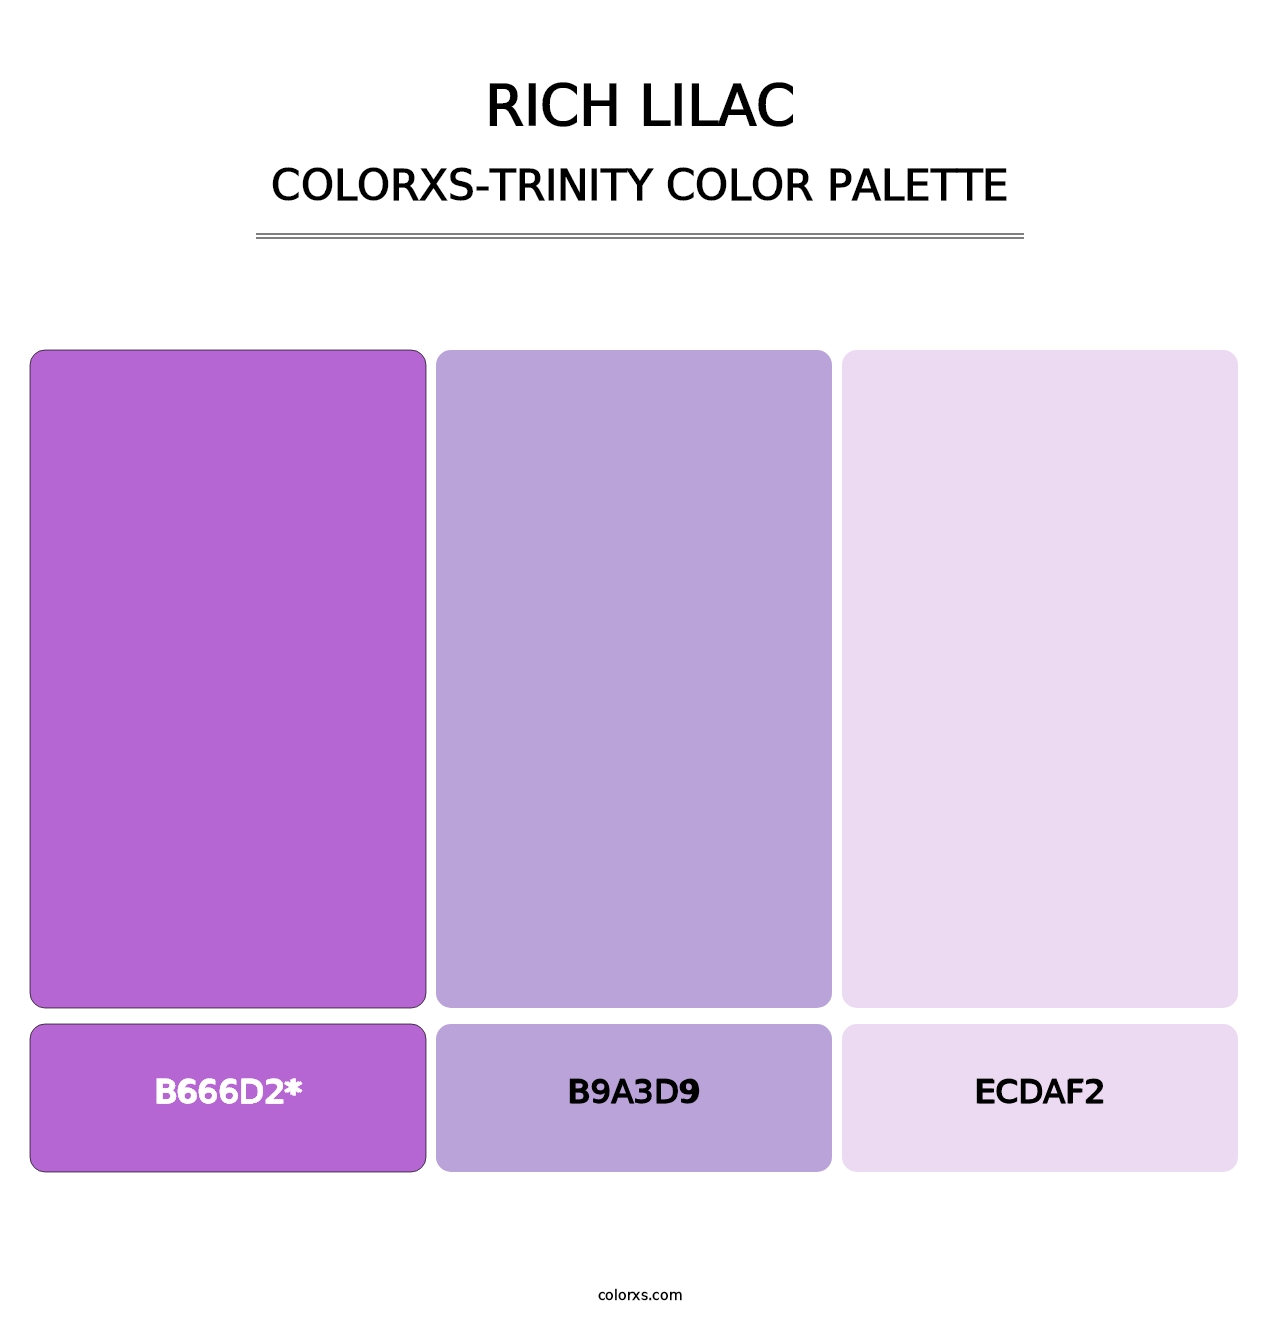 Rich Lilac - Colorxs Trinity Palette